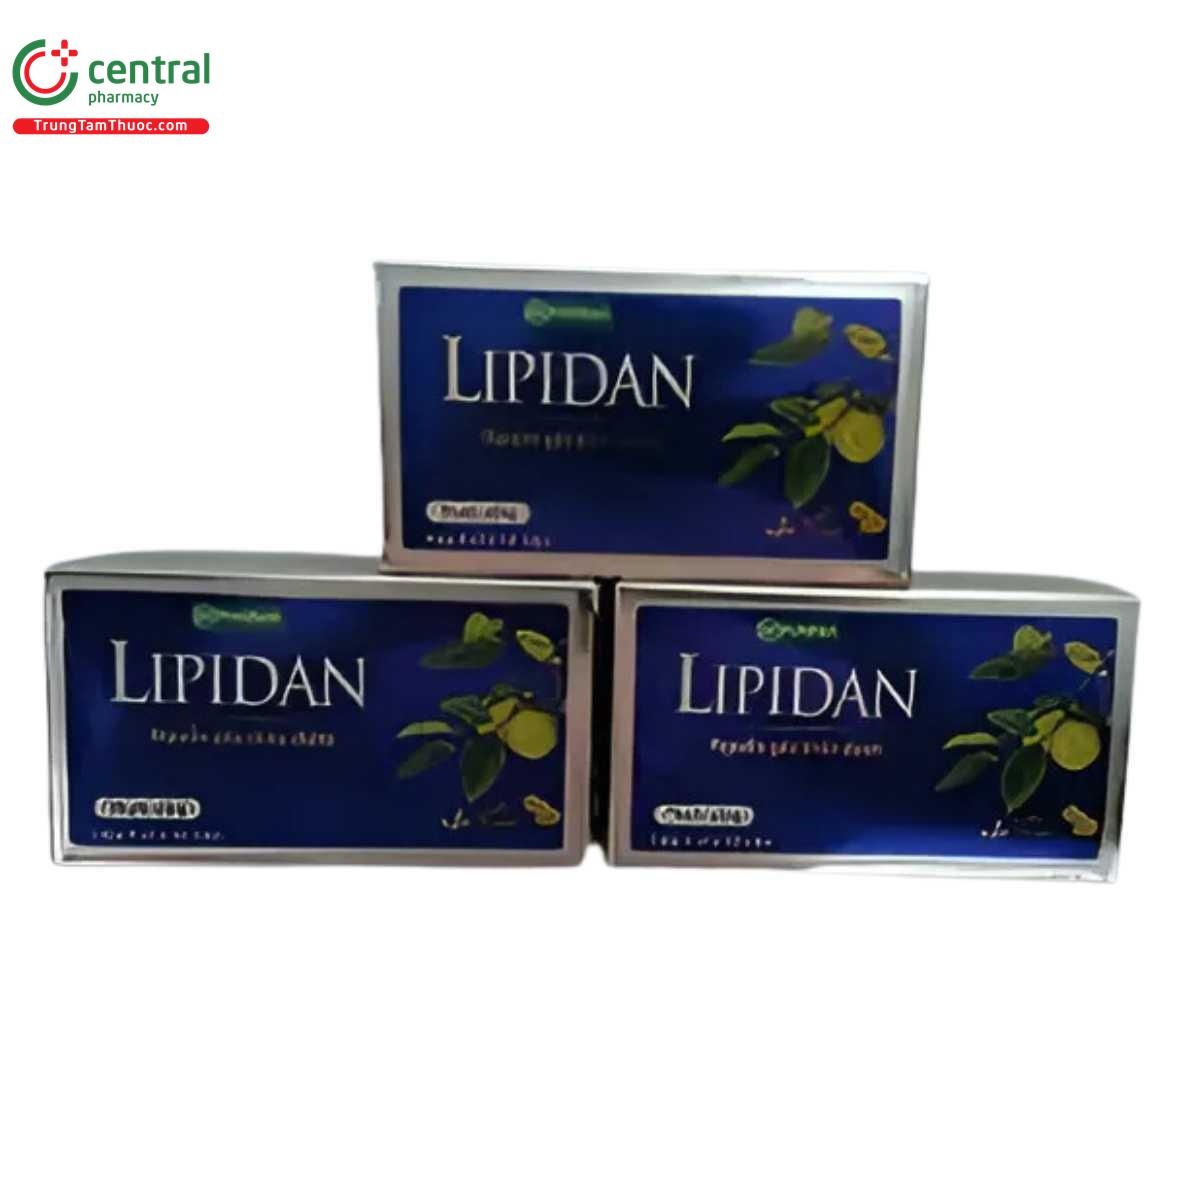 lipidan bv pharma 2 M5107